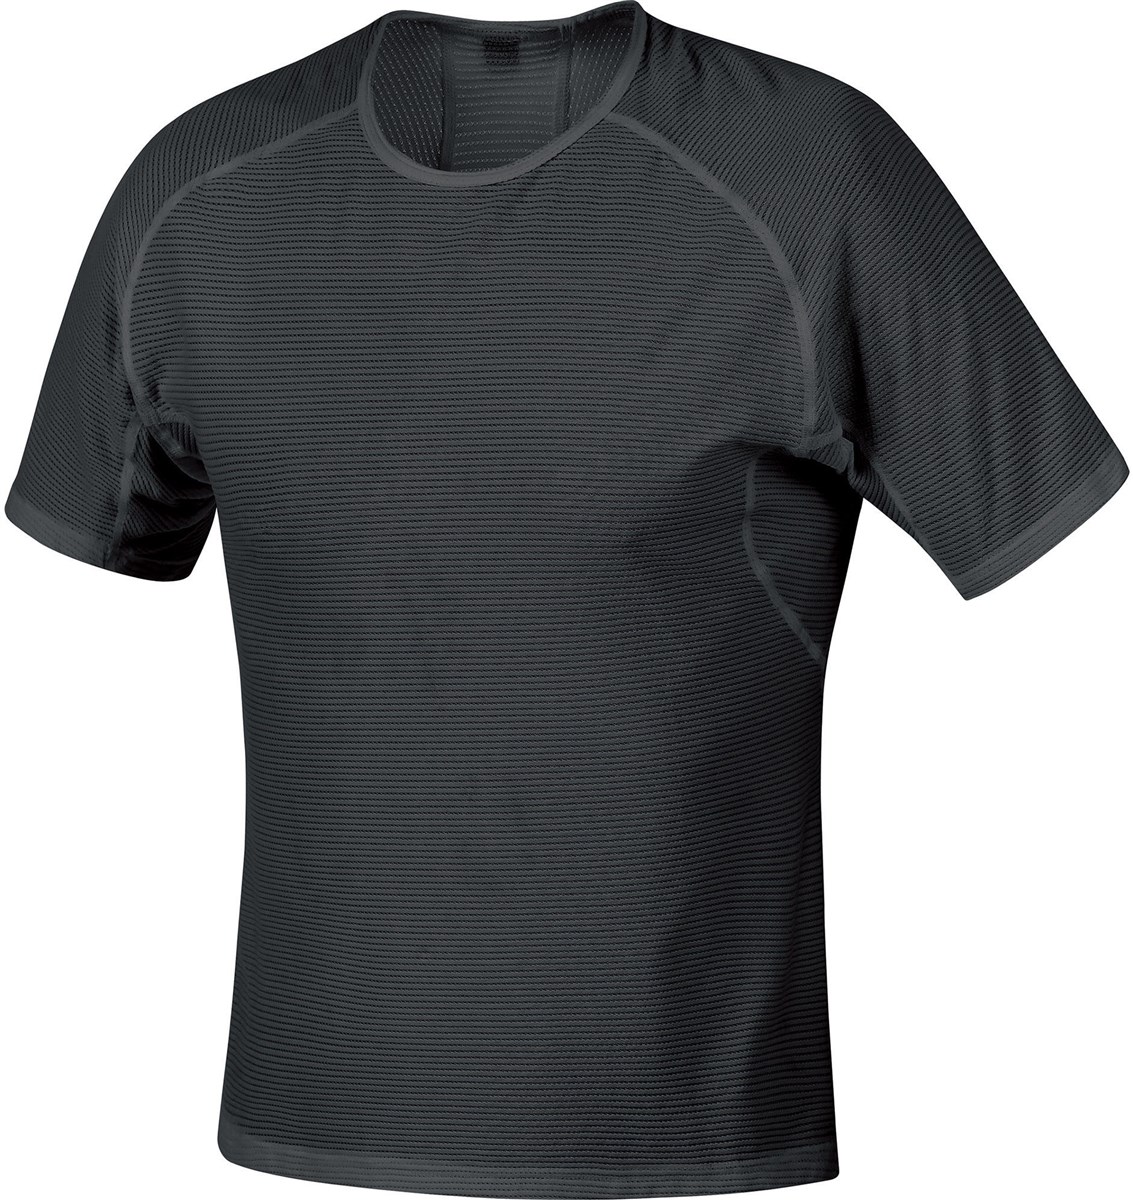 Gore Base Layer Shirt SS17 product image